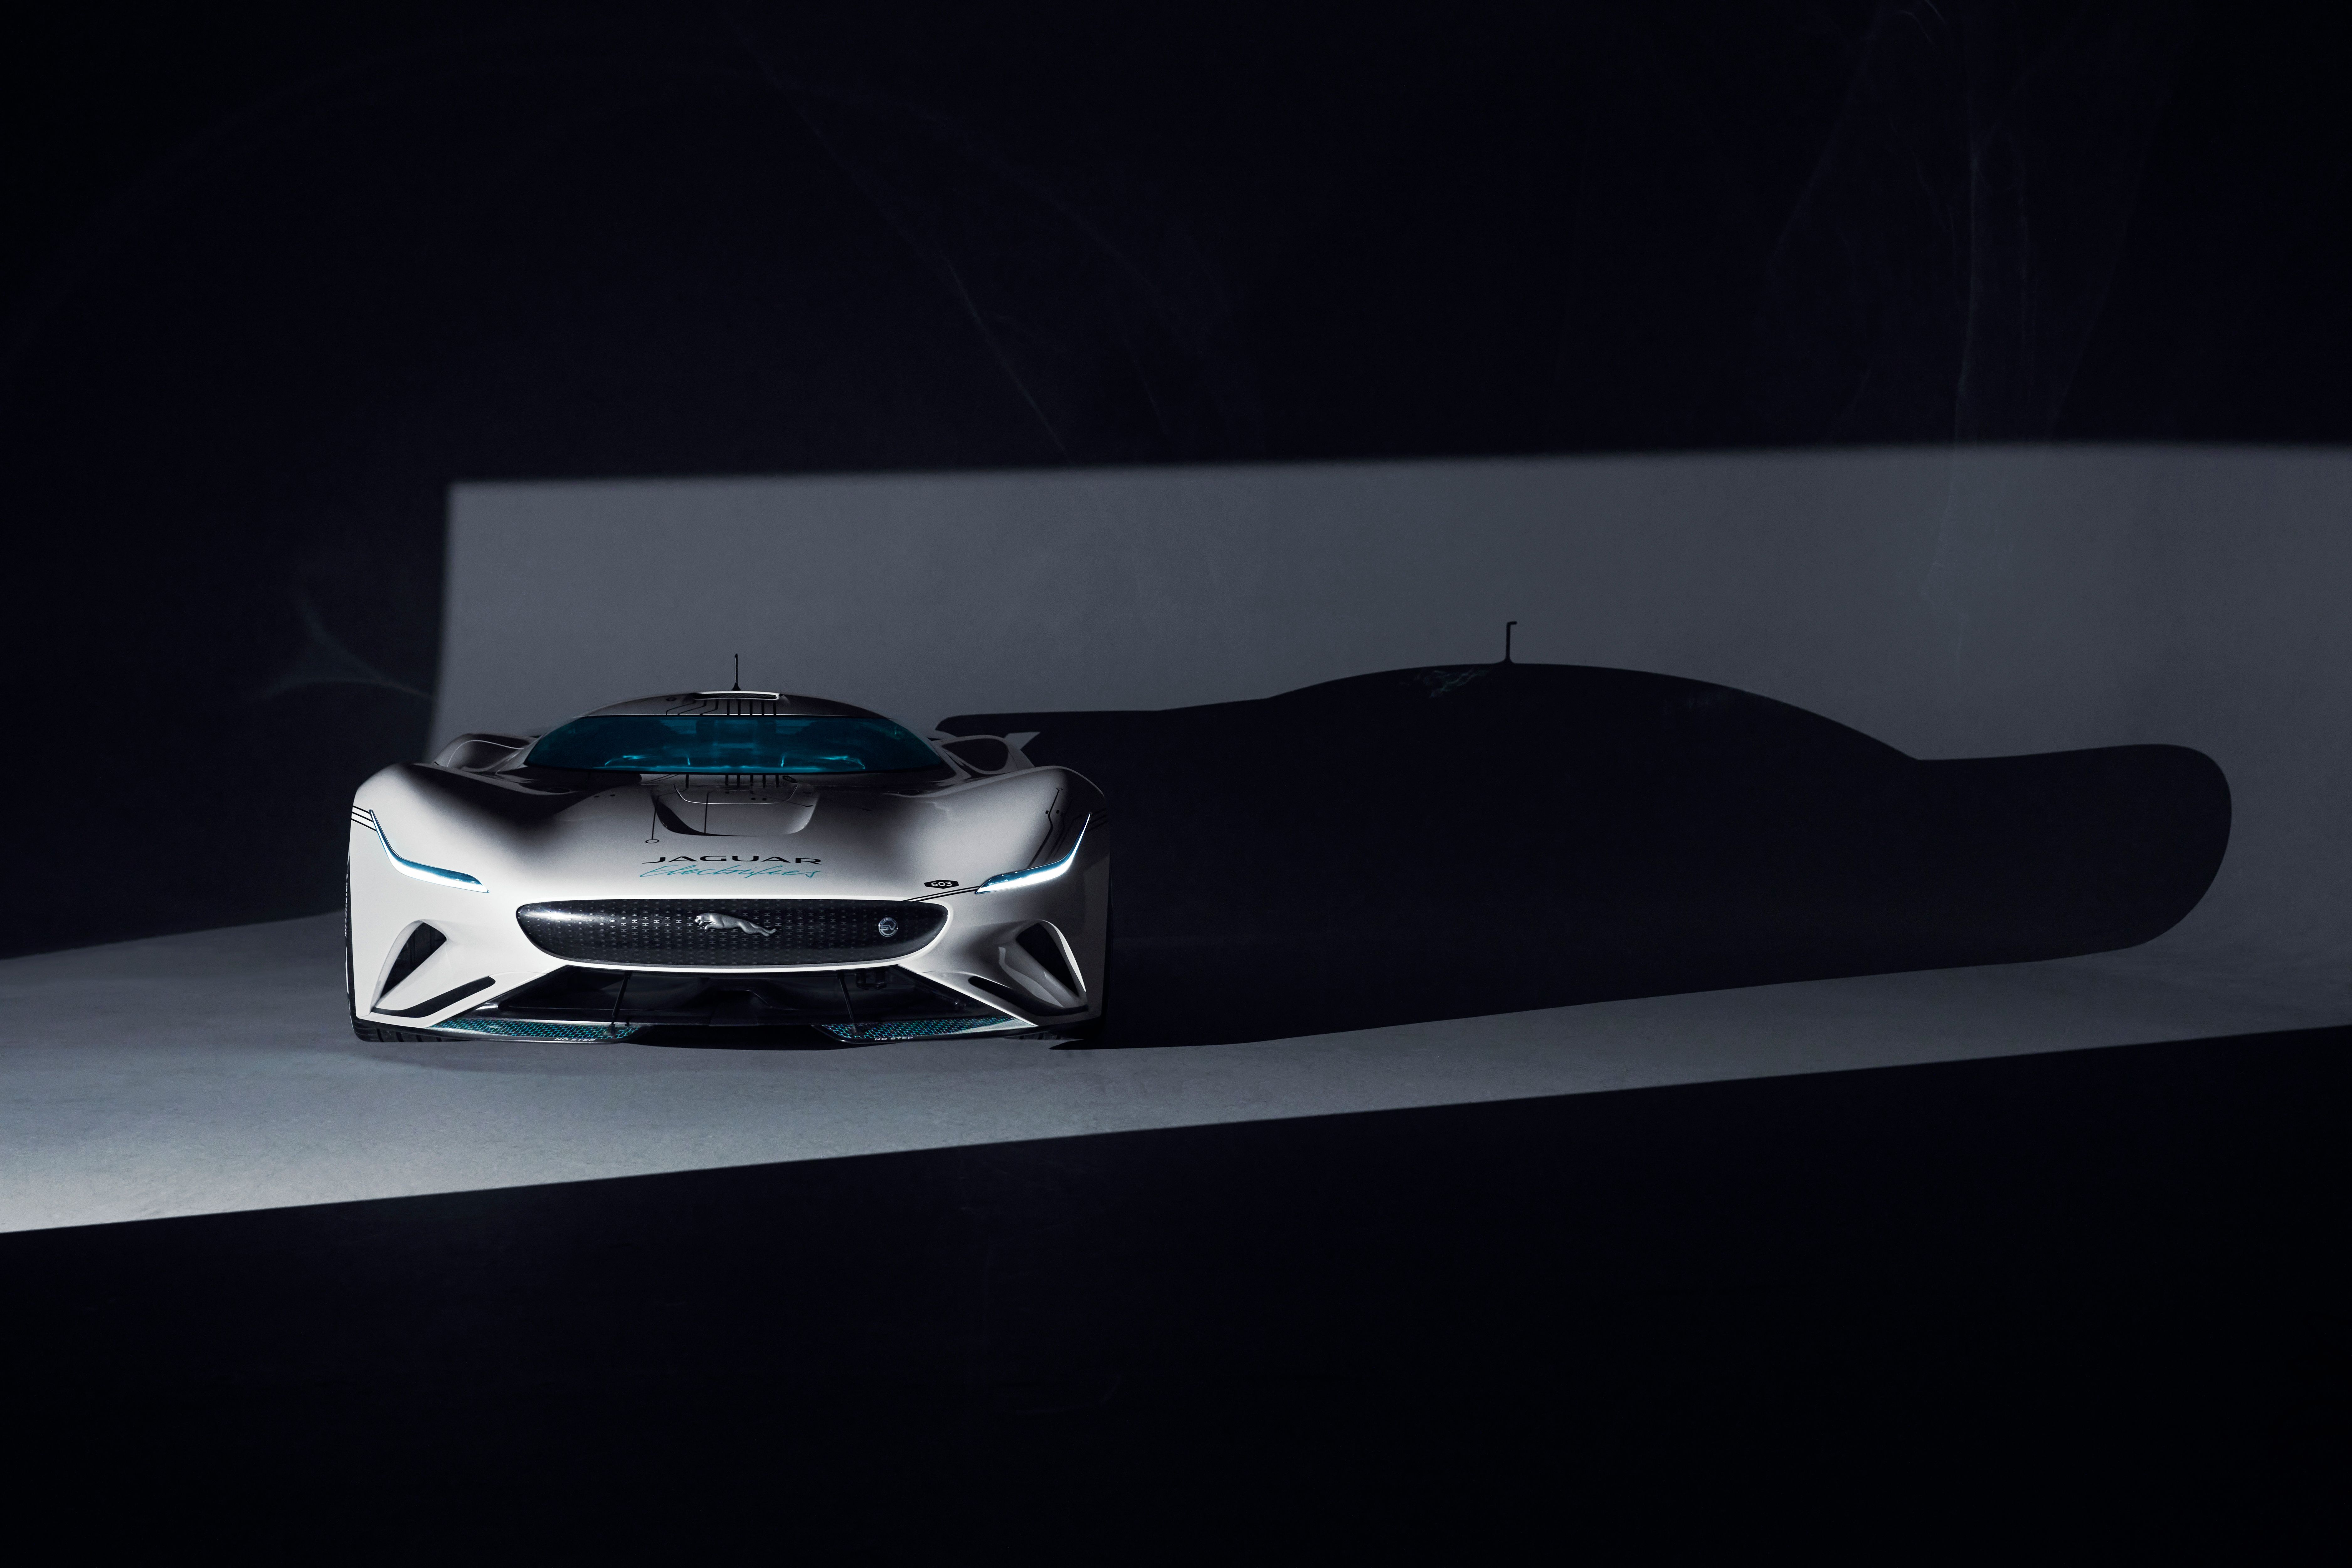 2020 Jaguar Vision Gran Turismo SV